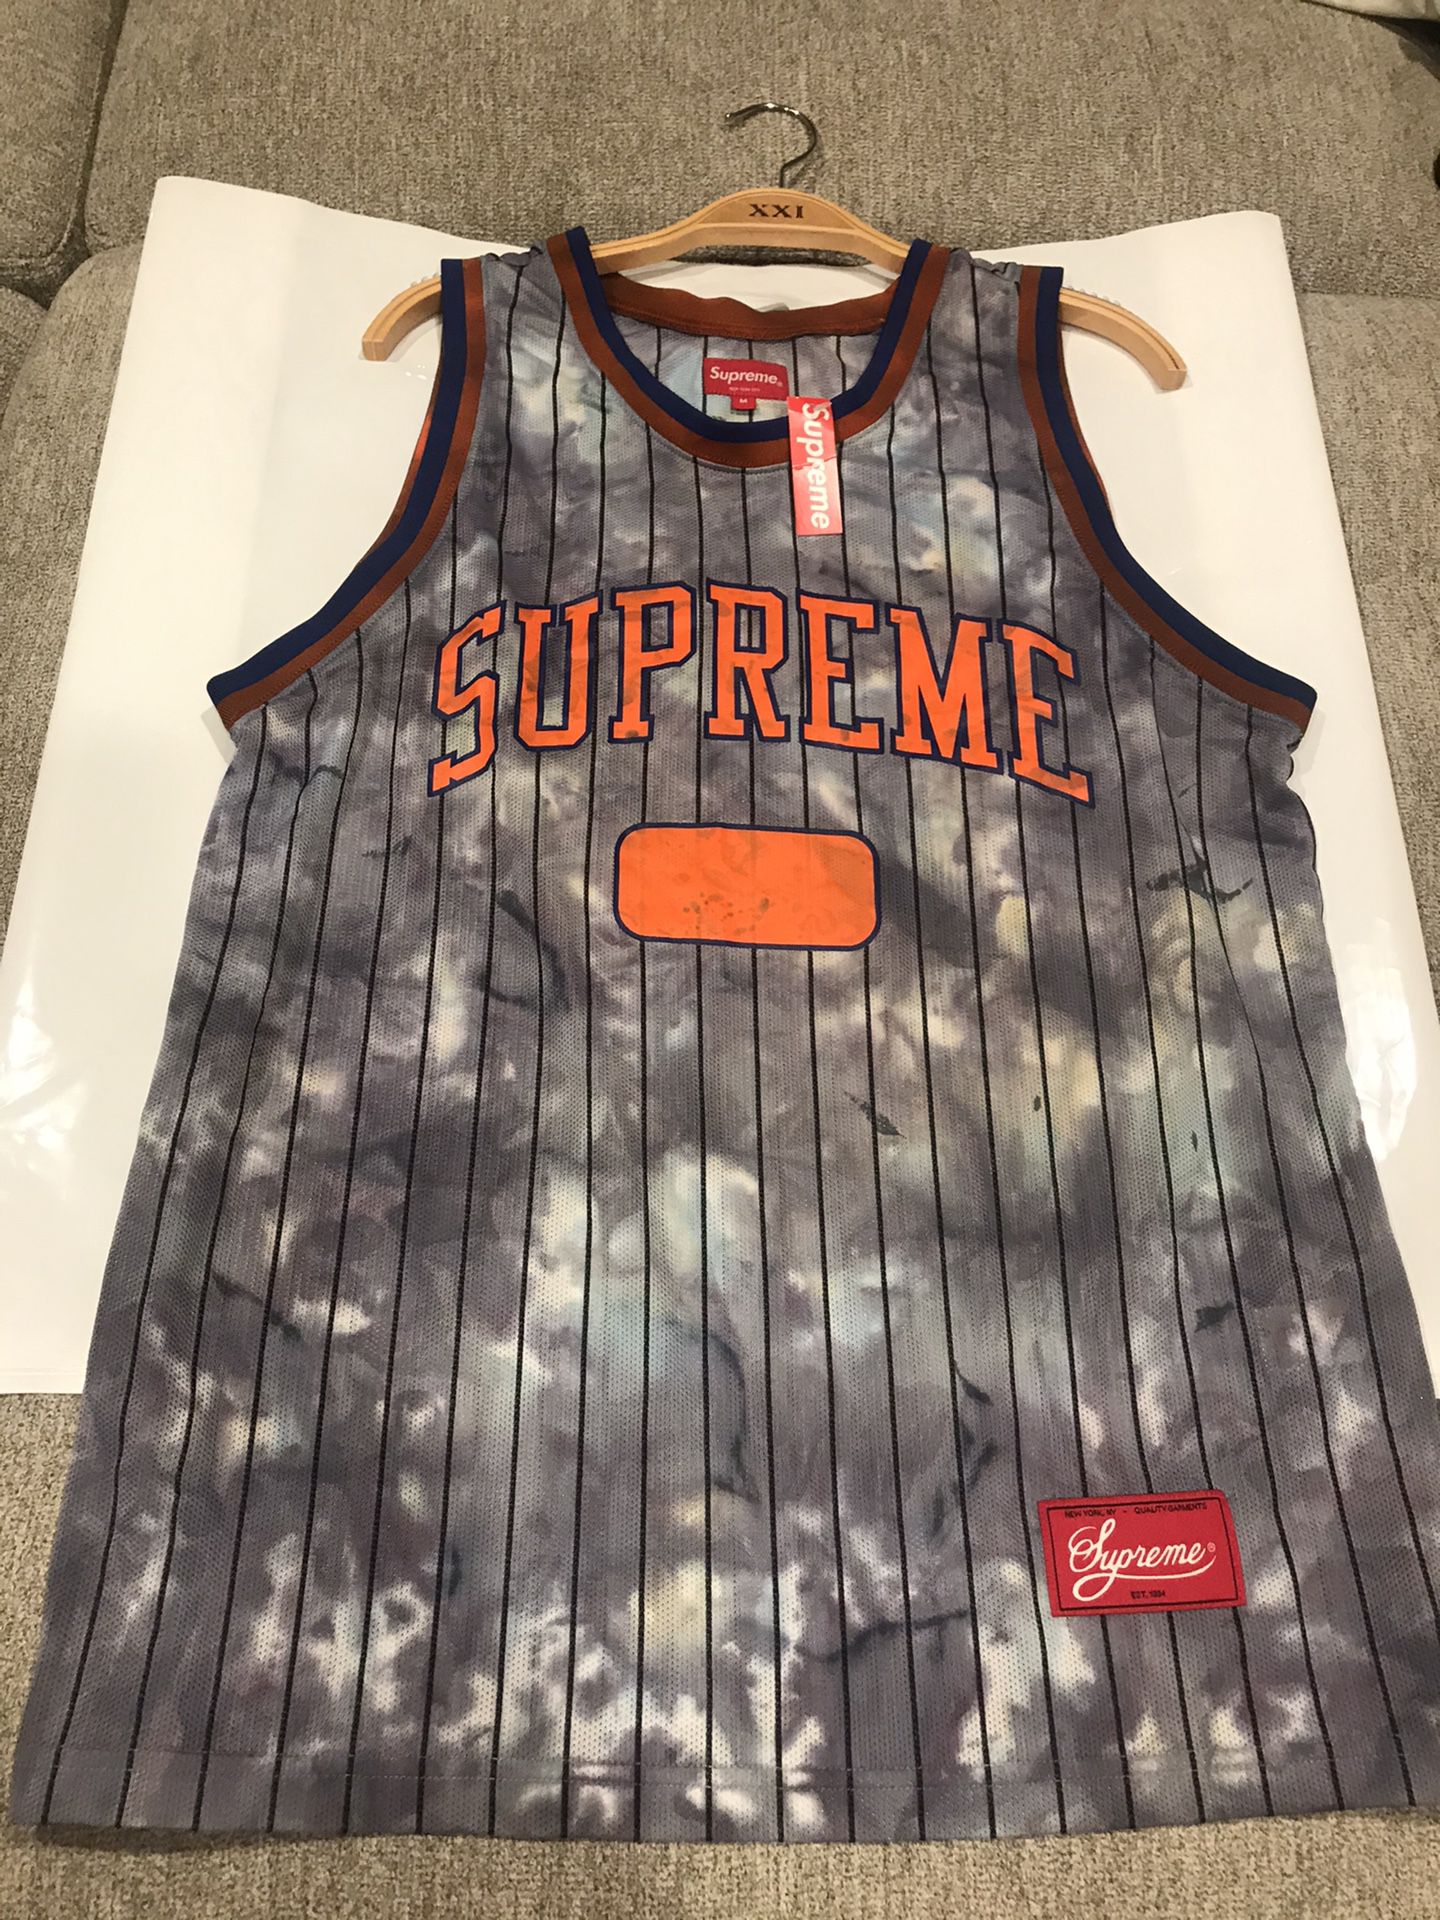 Supreme Jersey size medium (authentic)